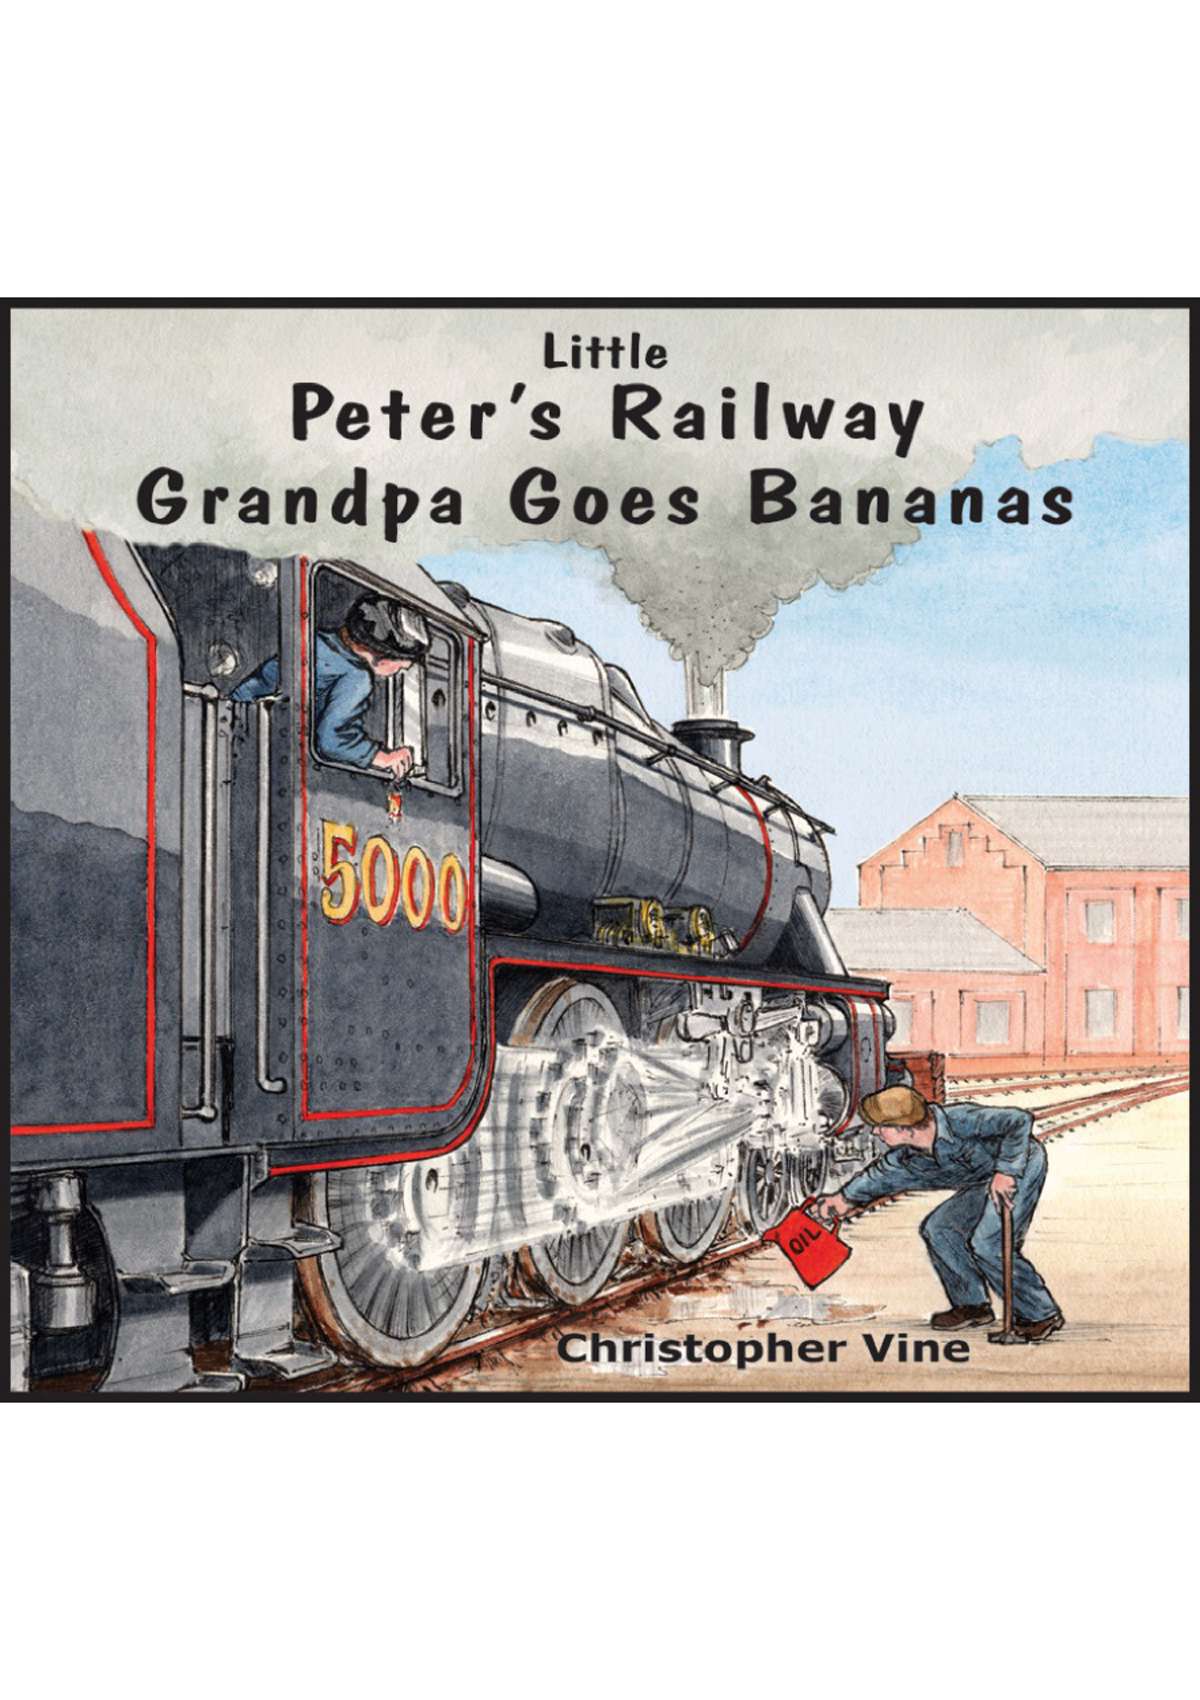 Little Peter's Railway - Grandpa Goes Bananas